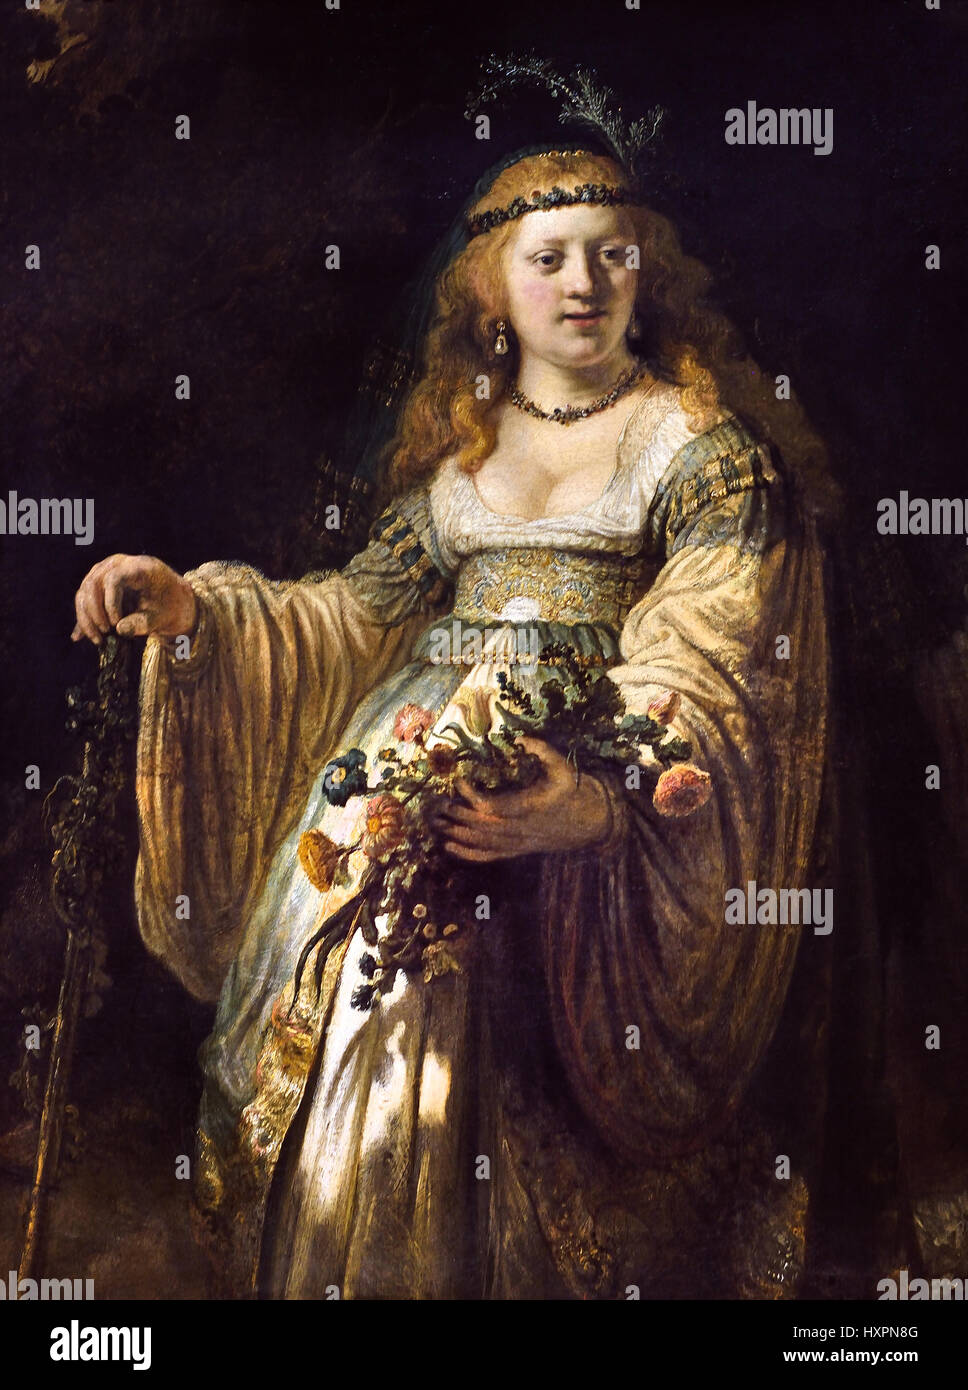 Saskia van Uylenburgh in arkadischen Kostüm Rembrandt 1635 Rembrandt Harmenszoon van Rijn1606 – 1669 Niederlande Niederlande Stockfoto